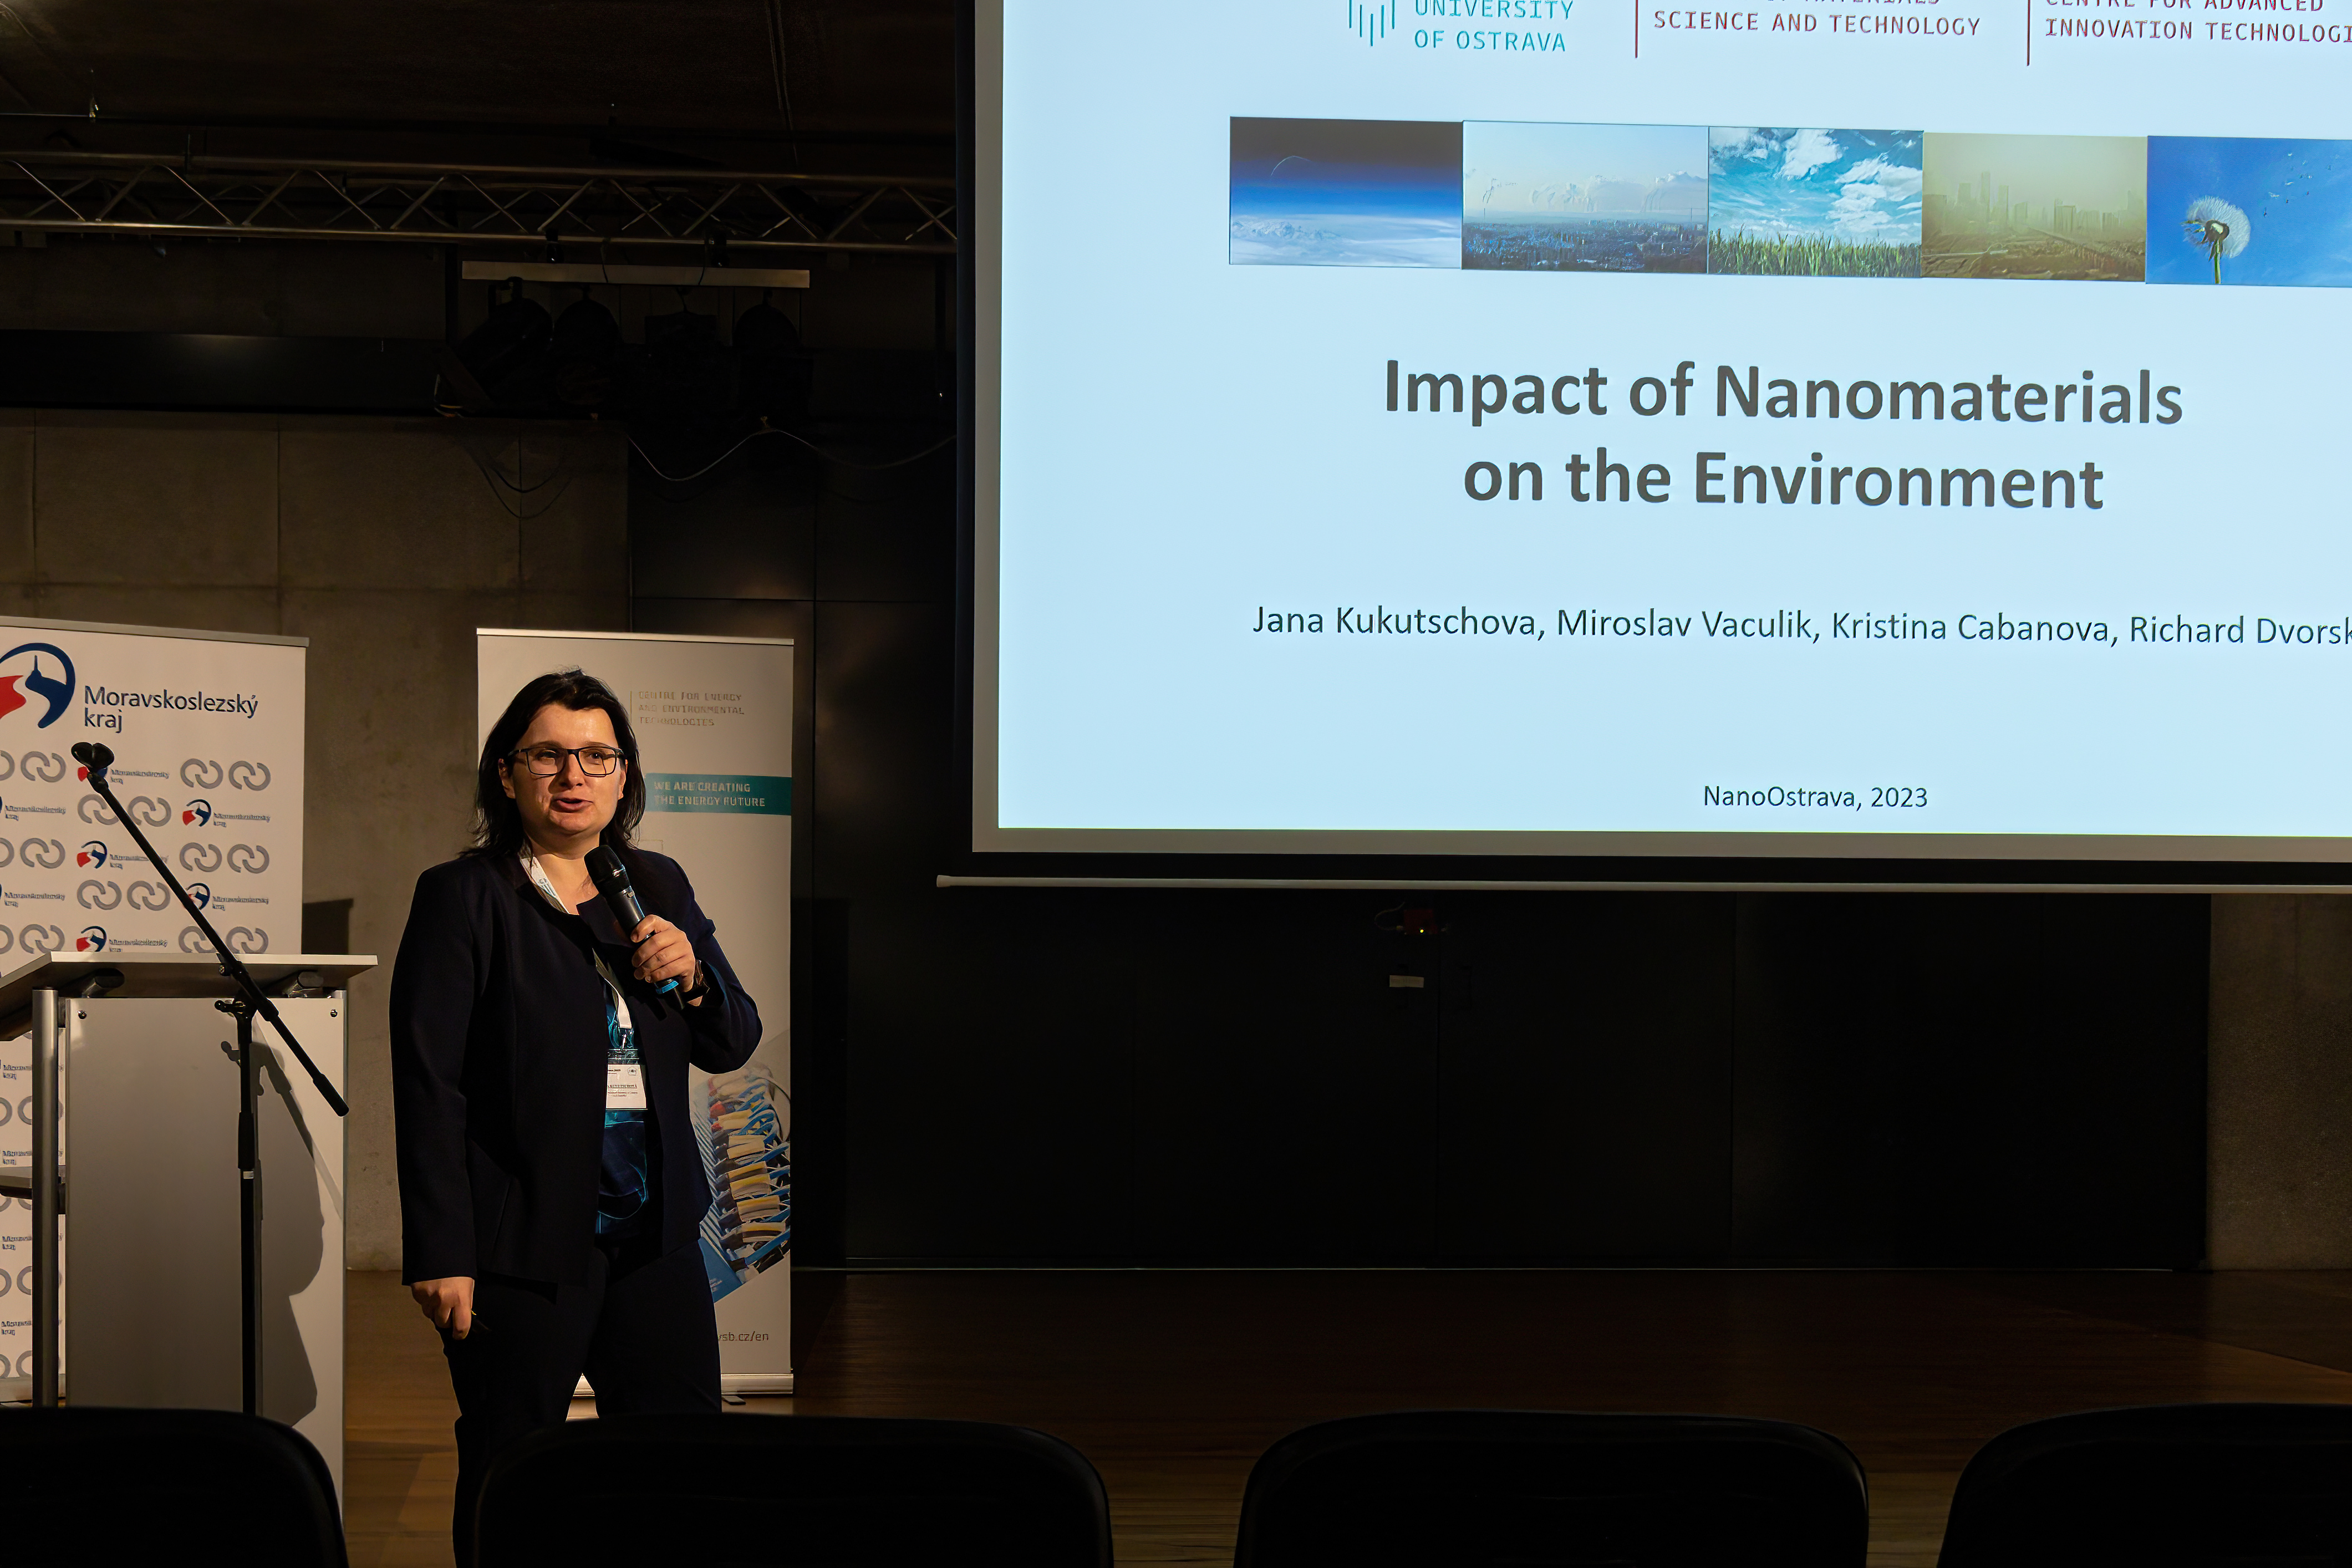  Prof. Kukutschová - Impact of nanomaterials on the environment